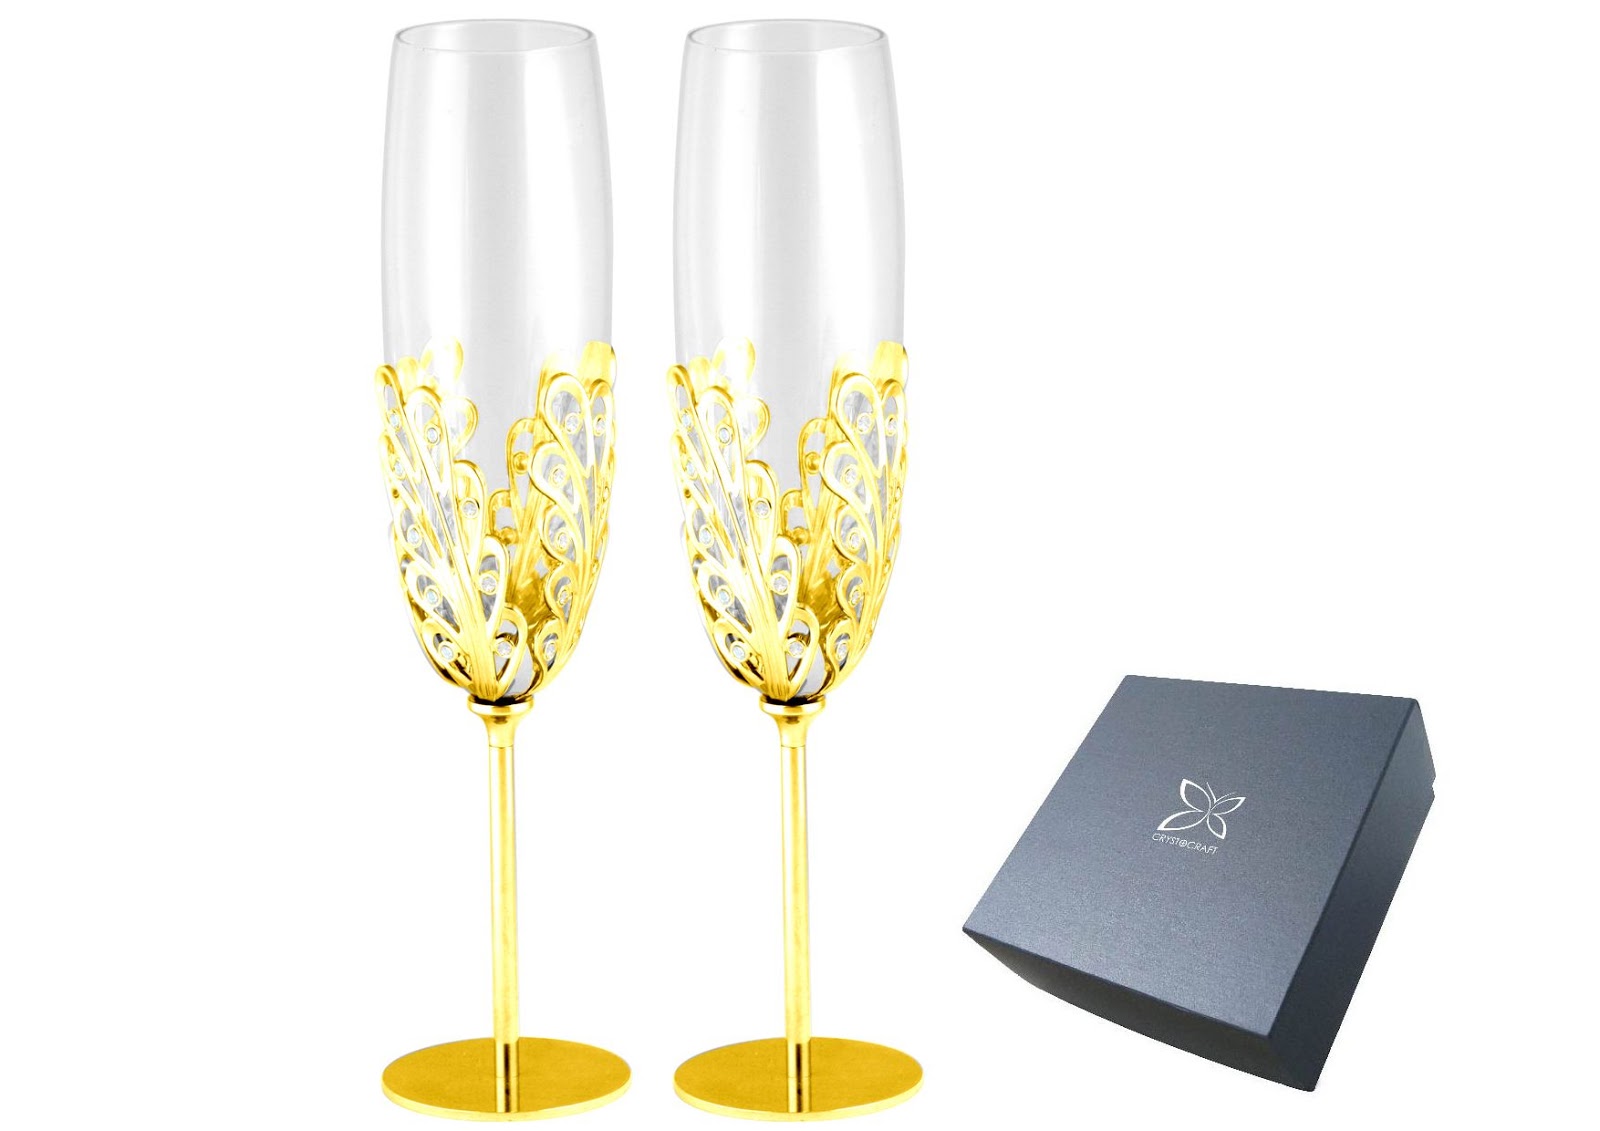 http://4.bp.blogspot.com/-02jrHsKNMX0/UIwrlhCfjkI/AAAAAAAAAJI/QKGmW9PoWkg/s1600/Crystocraft+Champagne+glass+set.jpg